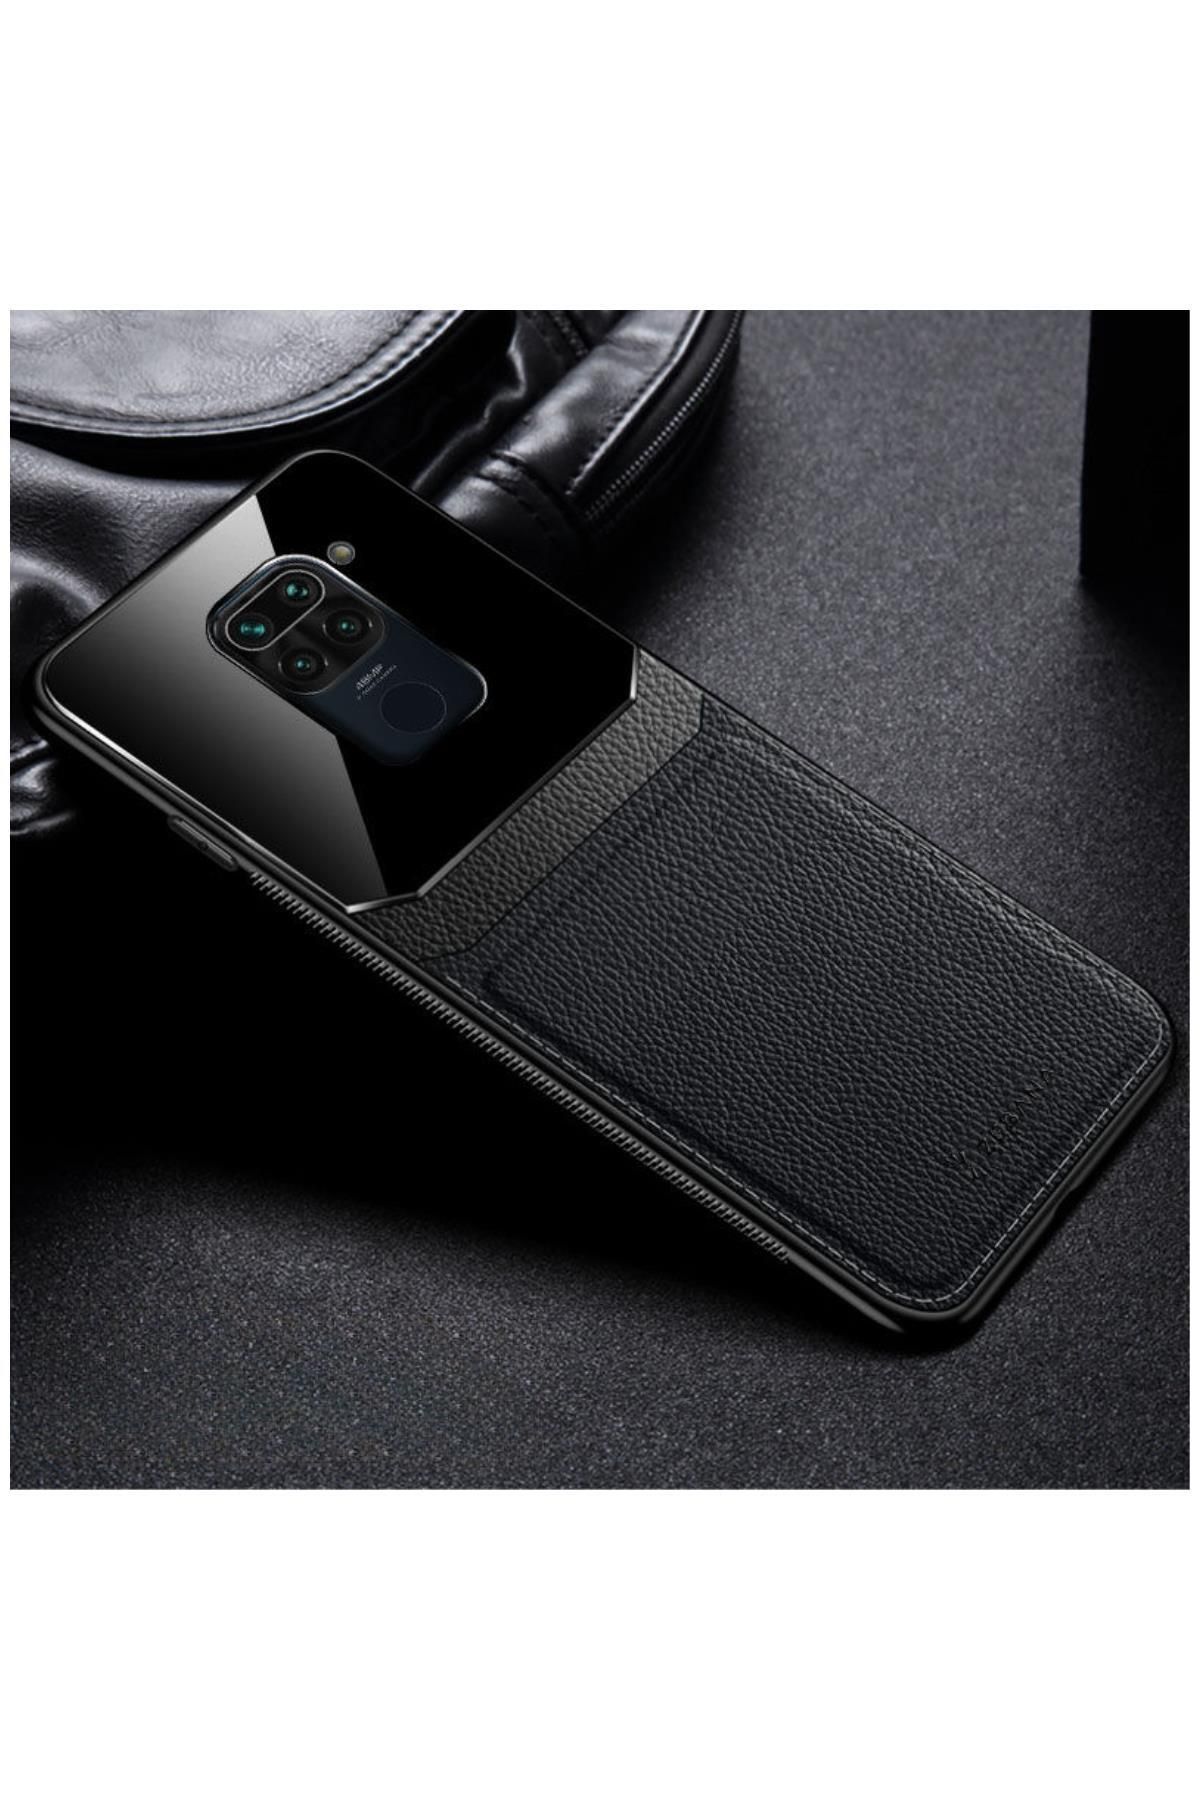 Zebana Xiaomi Redmi Note 9 Uyumlu Kılıf Lens Deri Kılıf Siyah